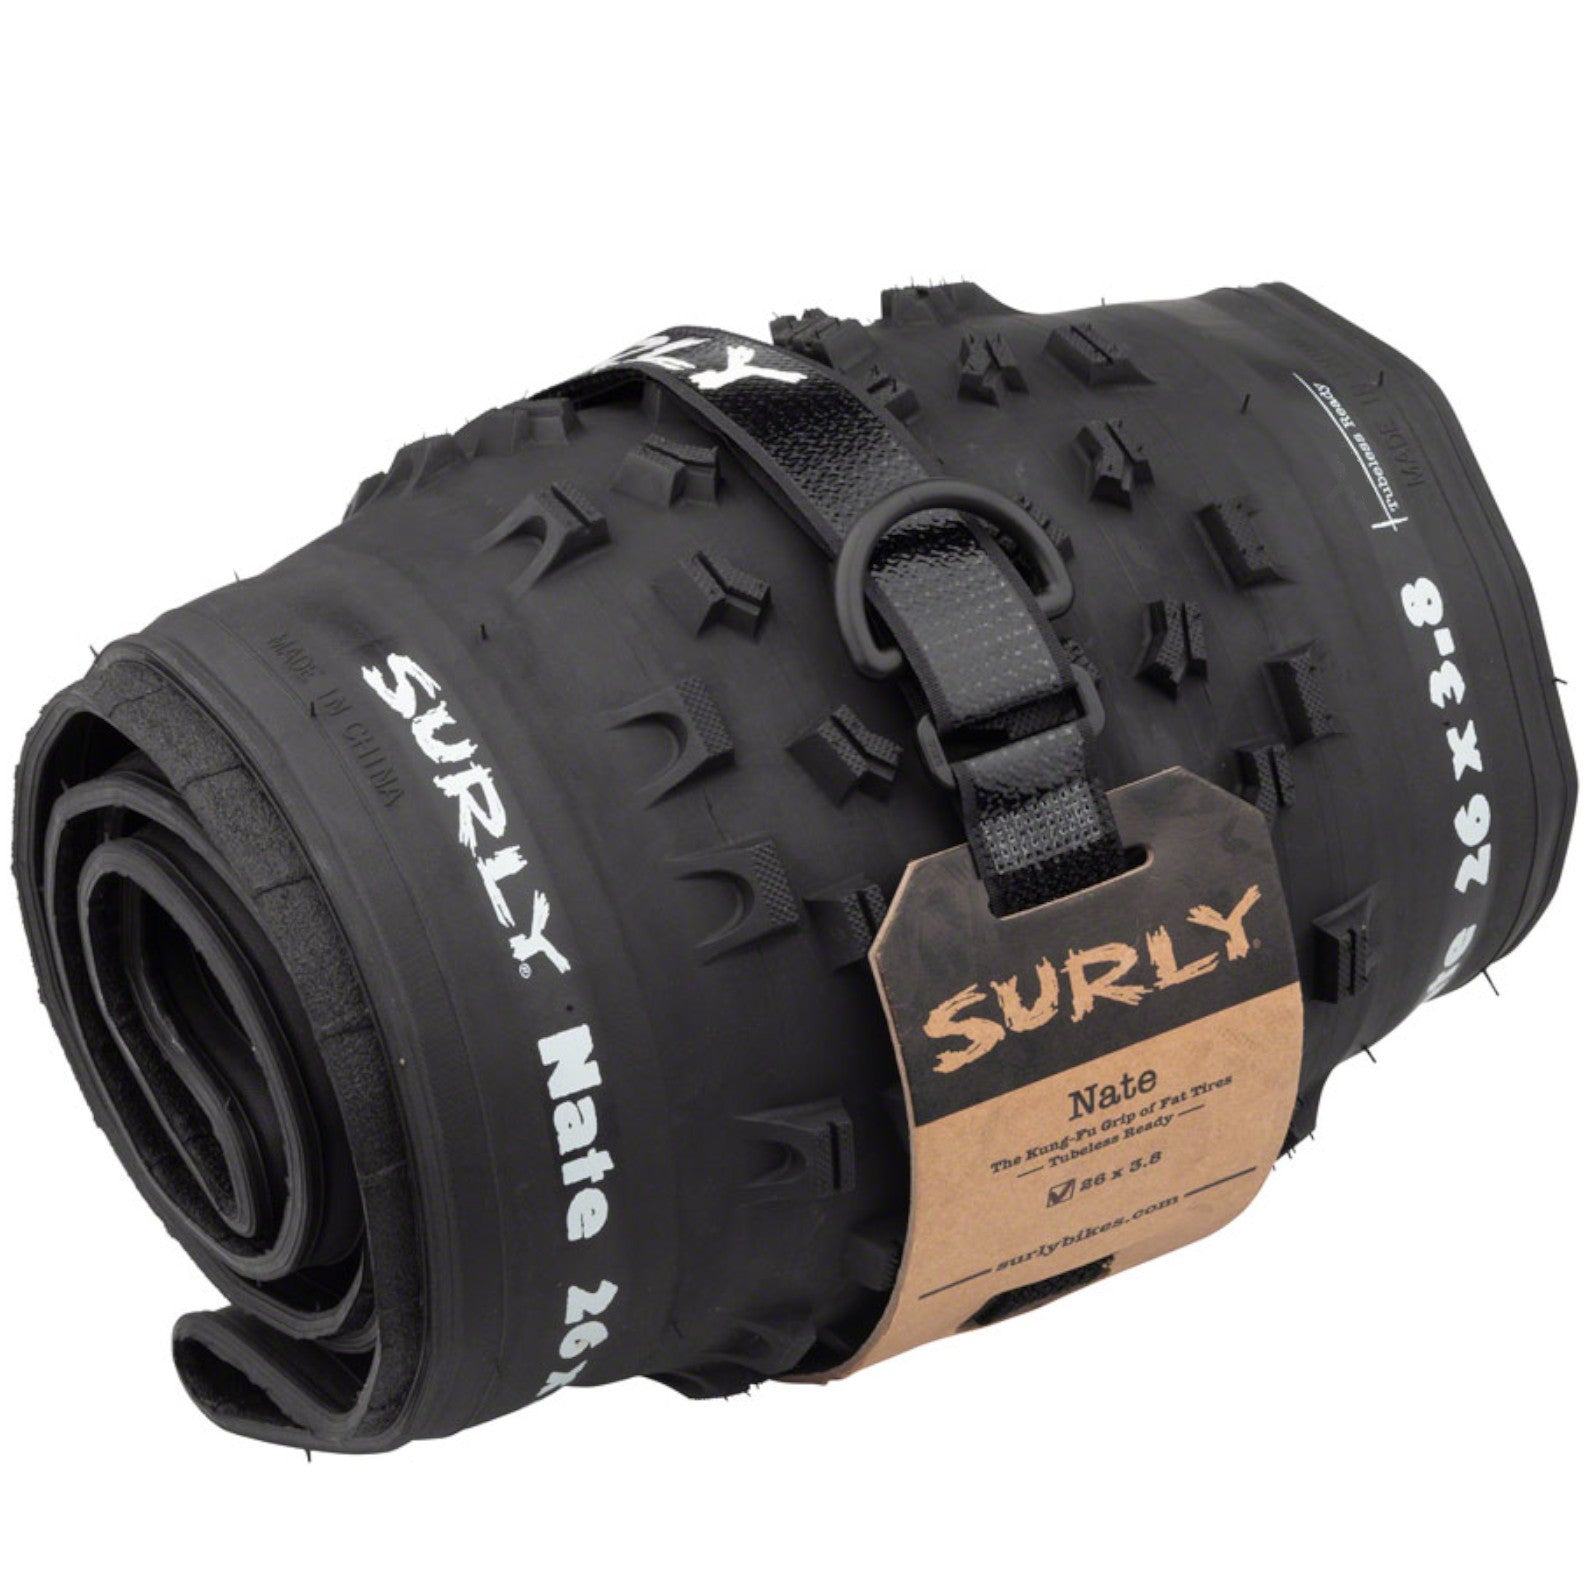 Surly Nate 26x3.8 Tubeless Folding Tire 60tpi - The Bikesmiths